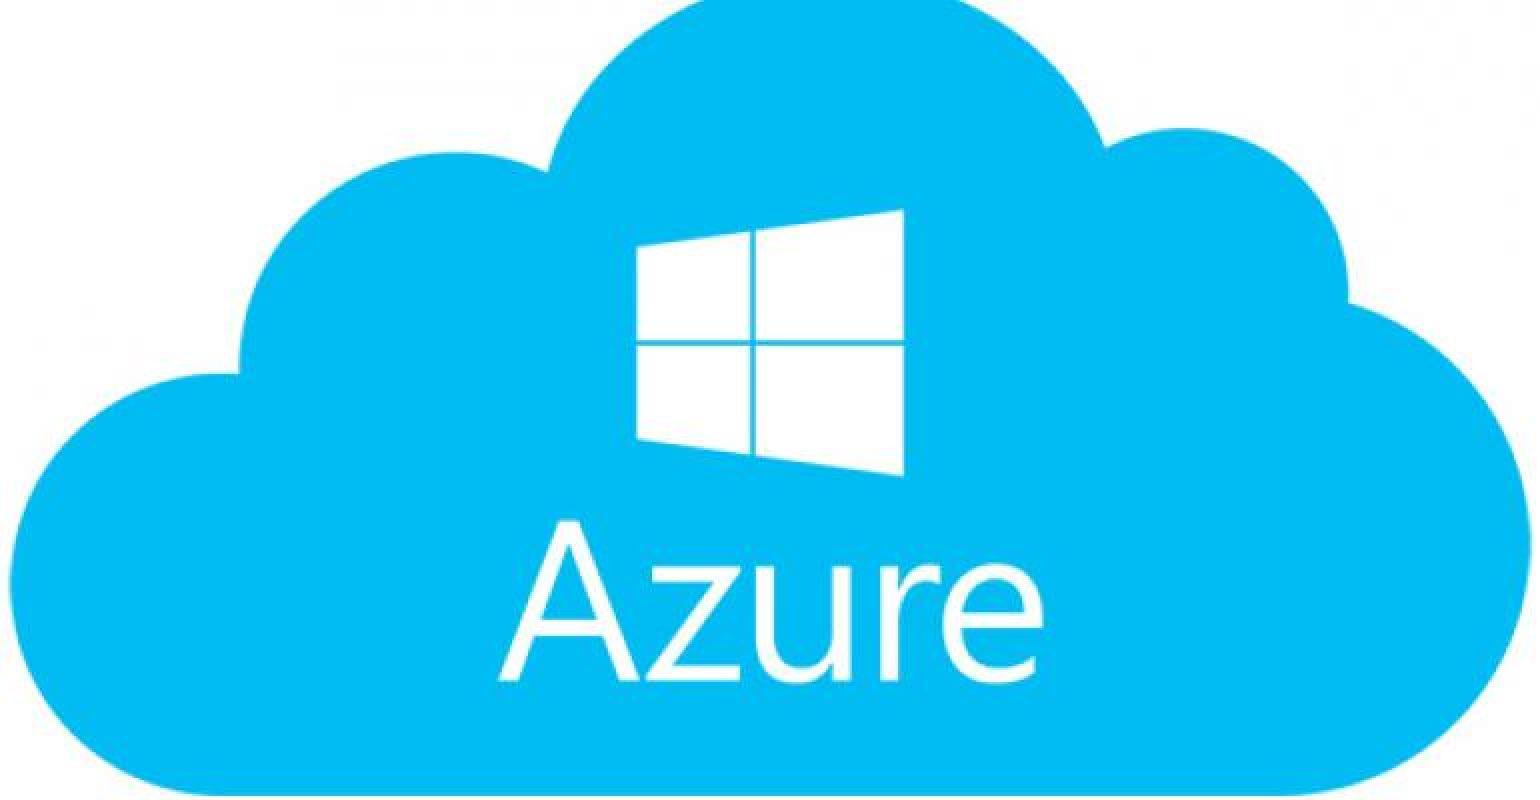 Microsoft Azure training for Beginners in Pensacola | Microsoft Azure Fundamentals | Azure cloud computing training | Microsoft Azure Fundamentals AZ-900 Certification Exam Prep (Preparation) Training Course